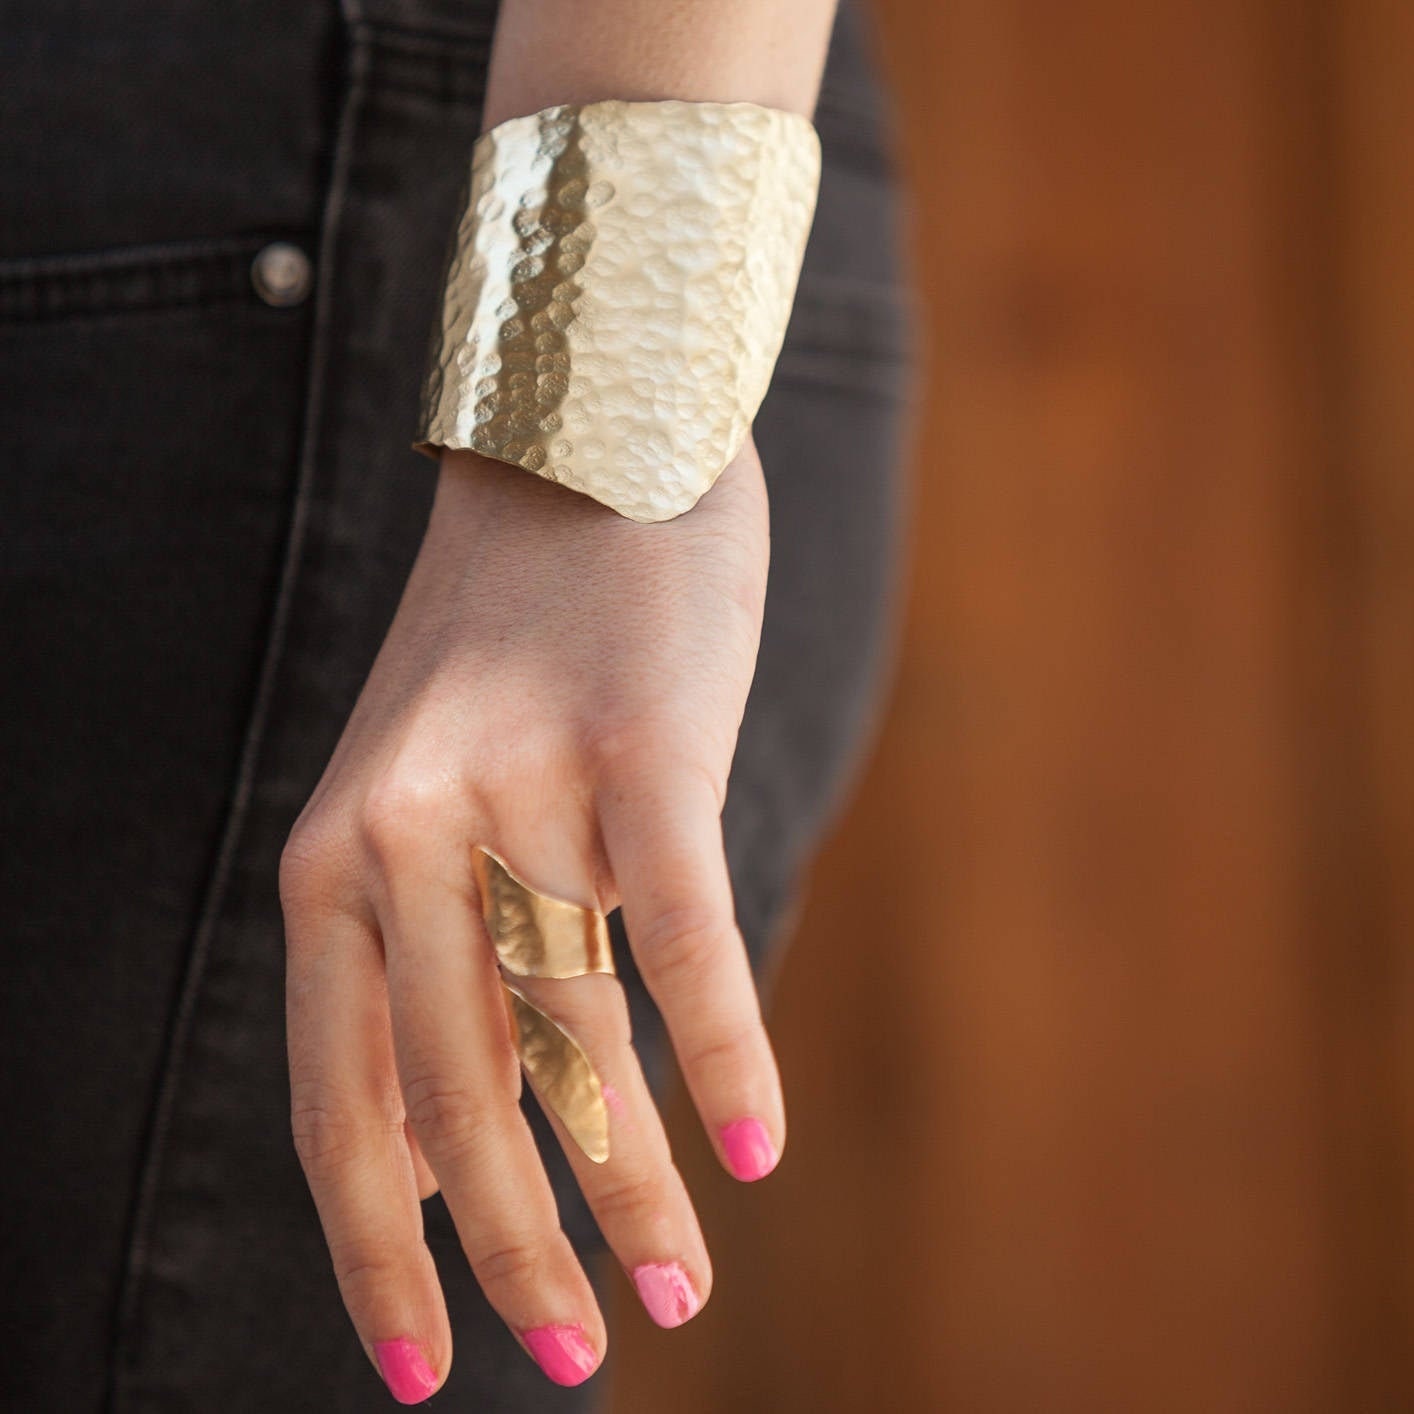 Extra wide custom made Cuff Bracelet 18k Rose Tone Gold plated hammered  bangle - George Lemmas Jewelry Designer